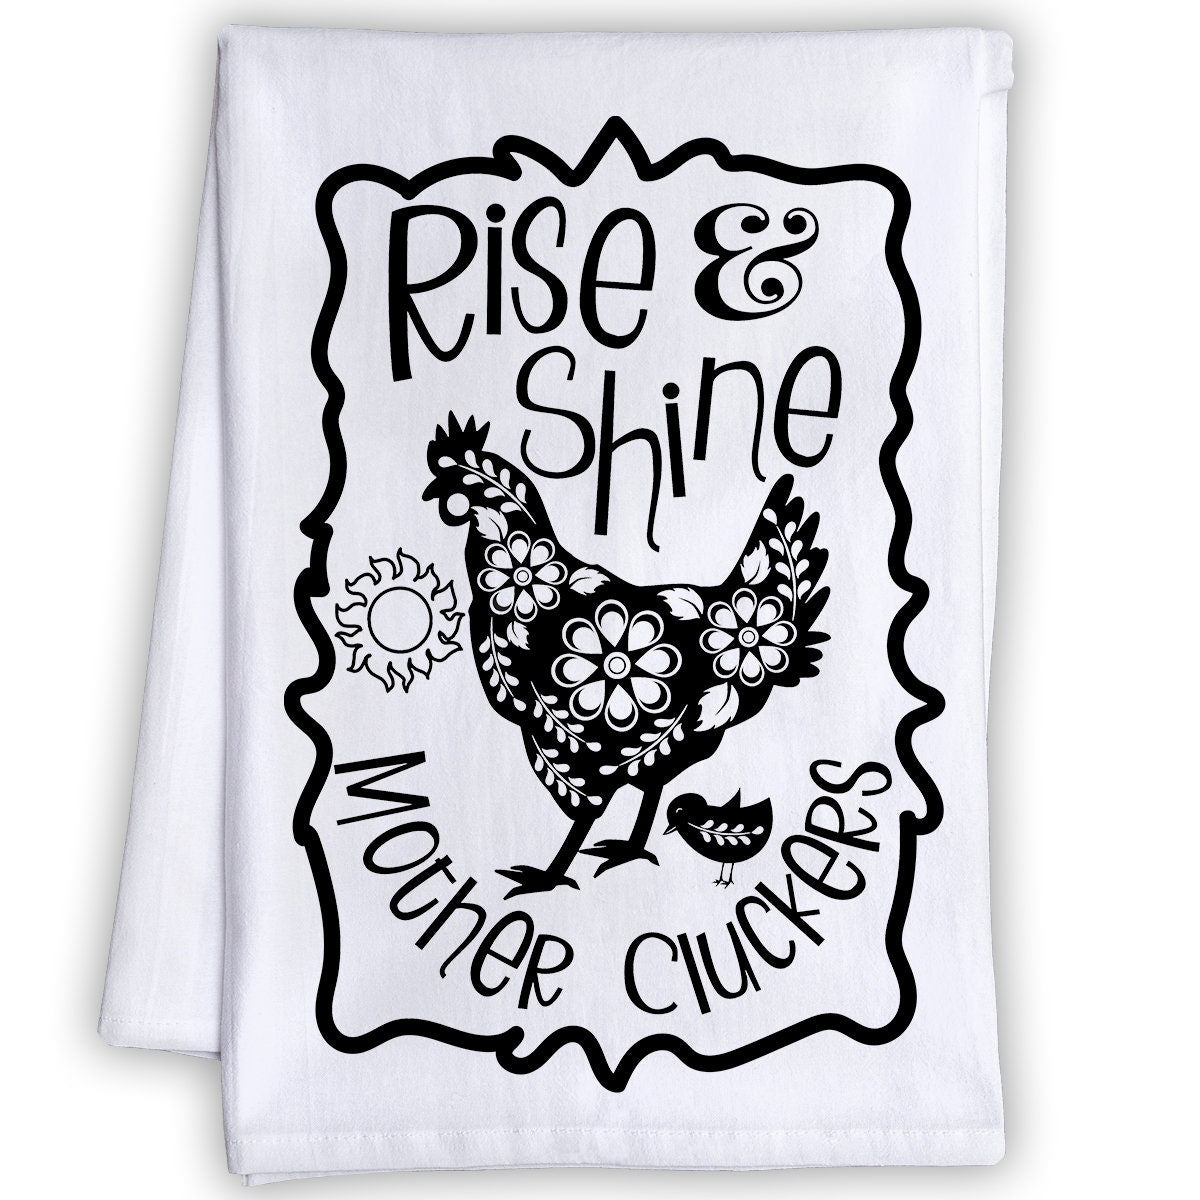 Funny Kitchen Tea Towels - Rise & Shine Mother Cluckers - Humorous Fun Sayings - Cute Housewarming Gift/Fun Home Decor Lone Star Art 